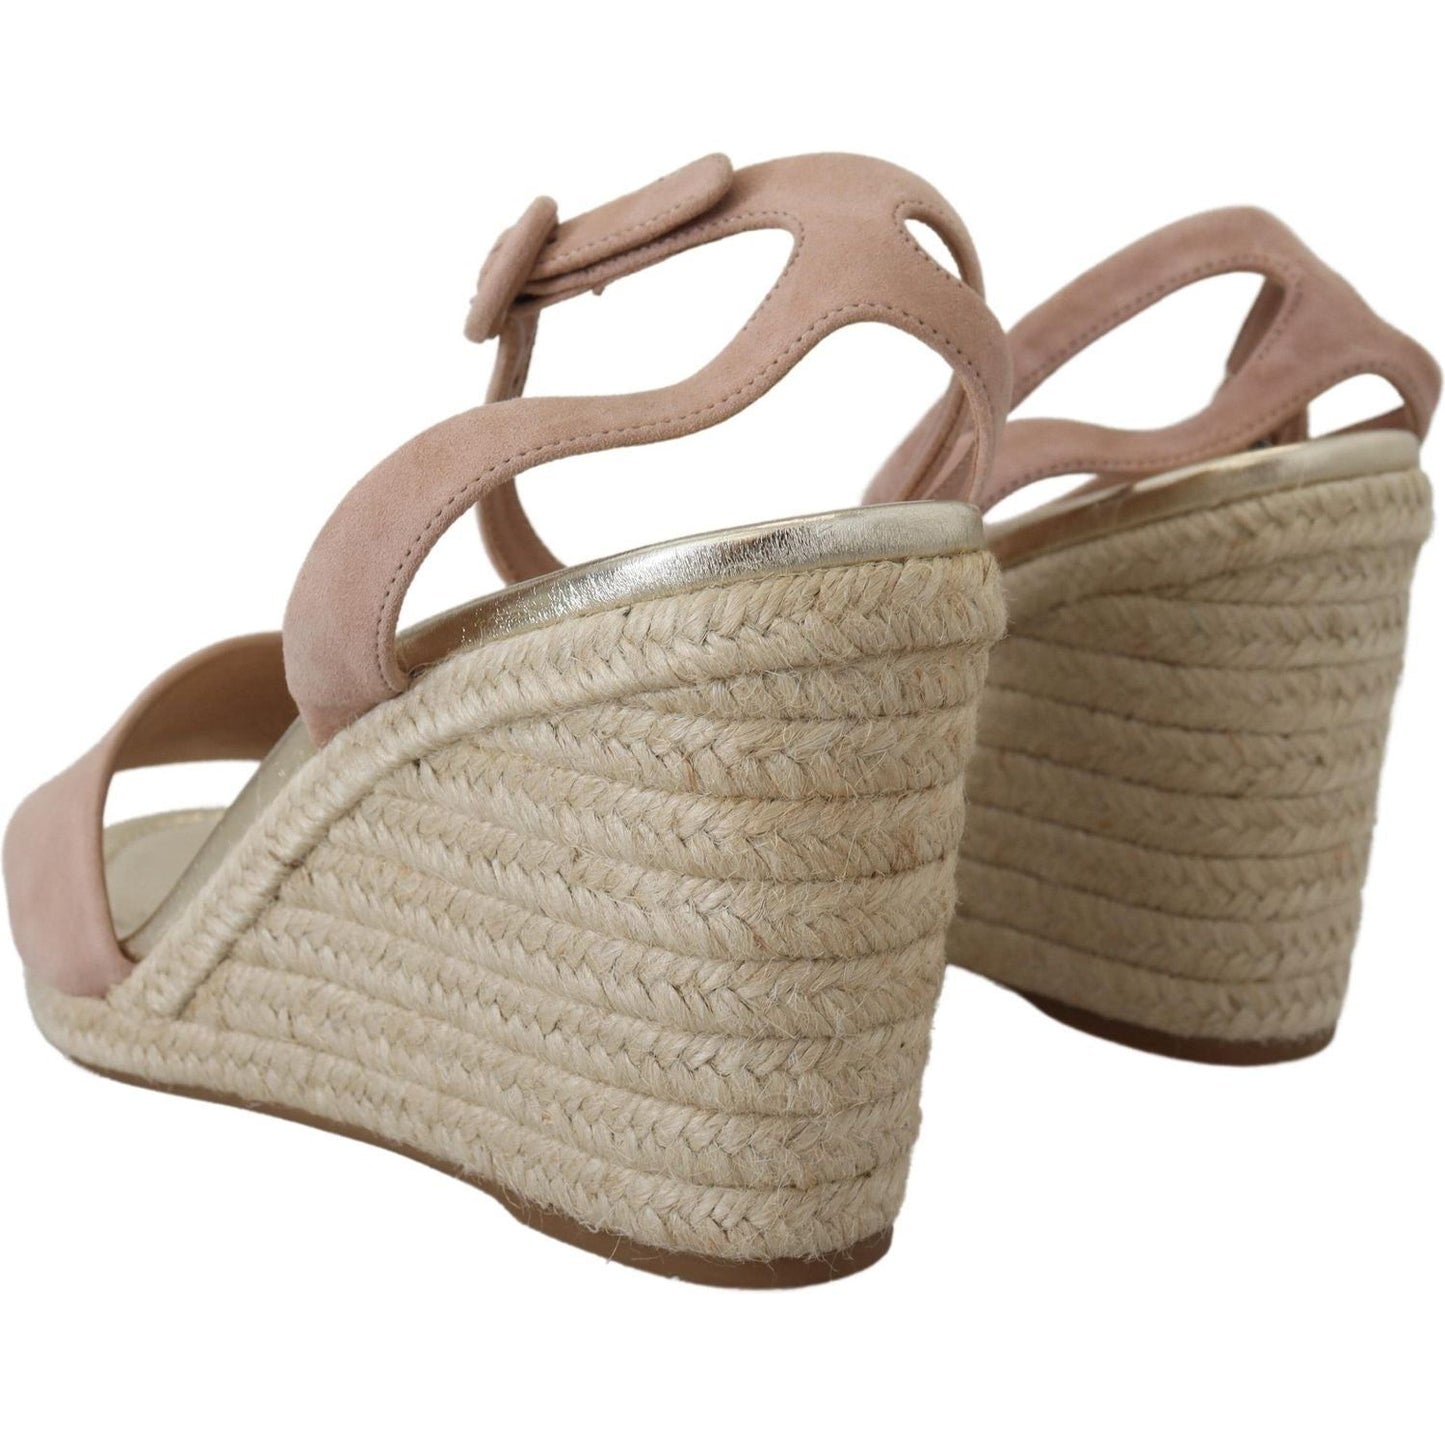 Prada Elegant Suede Ankle Strap Wedge Sandals pink-suede-leather-ankle-strap-sandals IMG_8318-1-0146ae47-86b.jpg